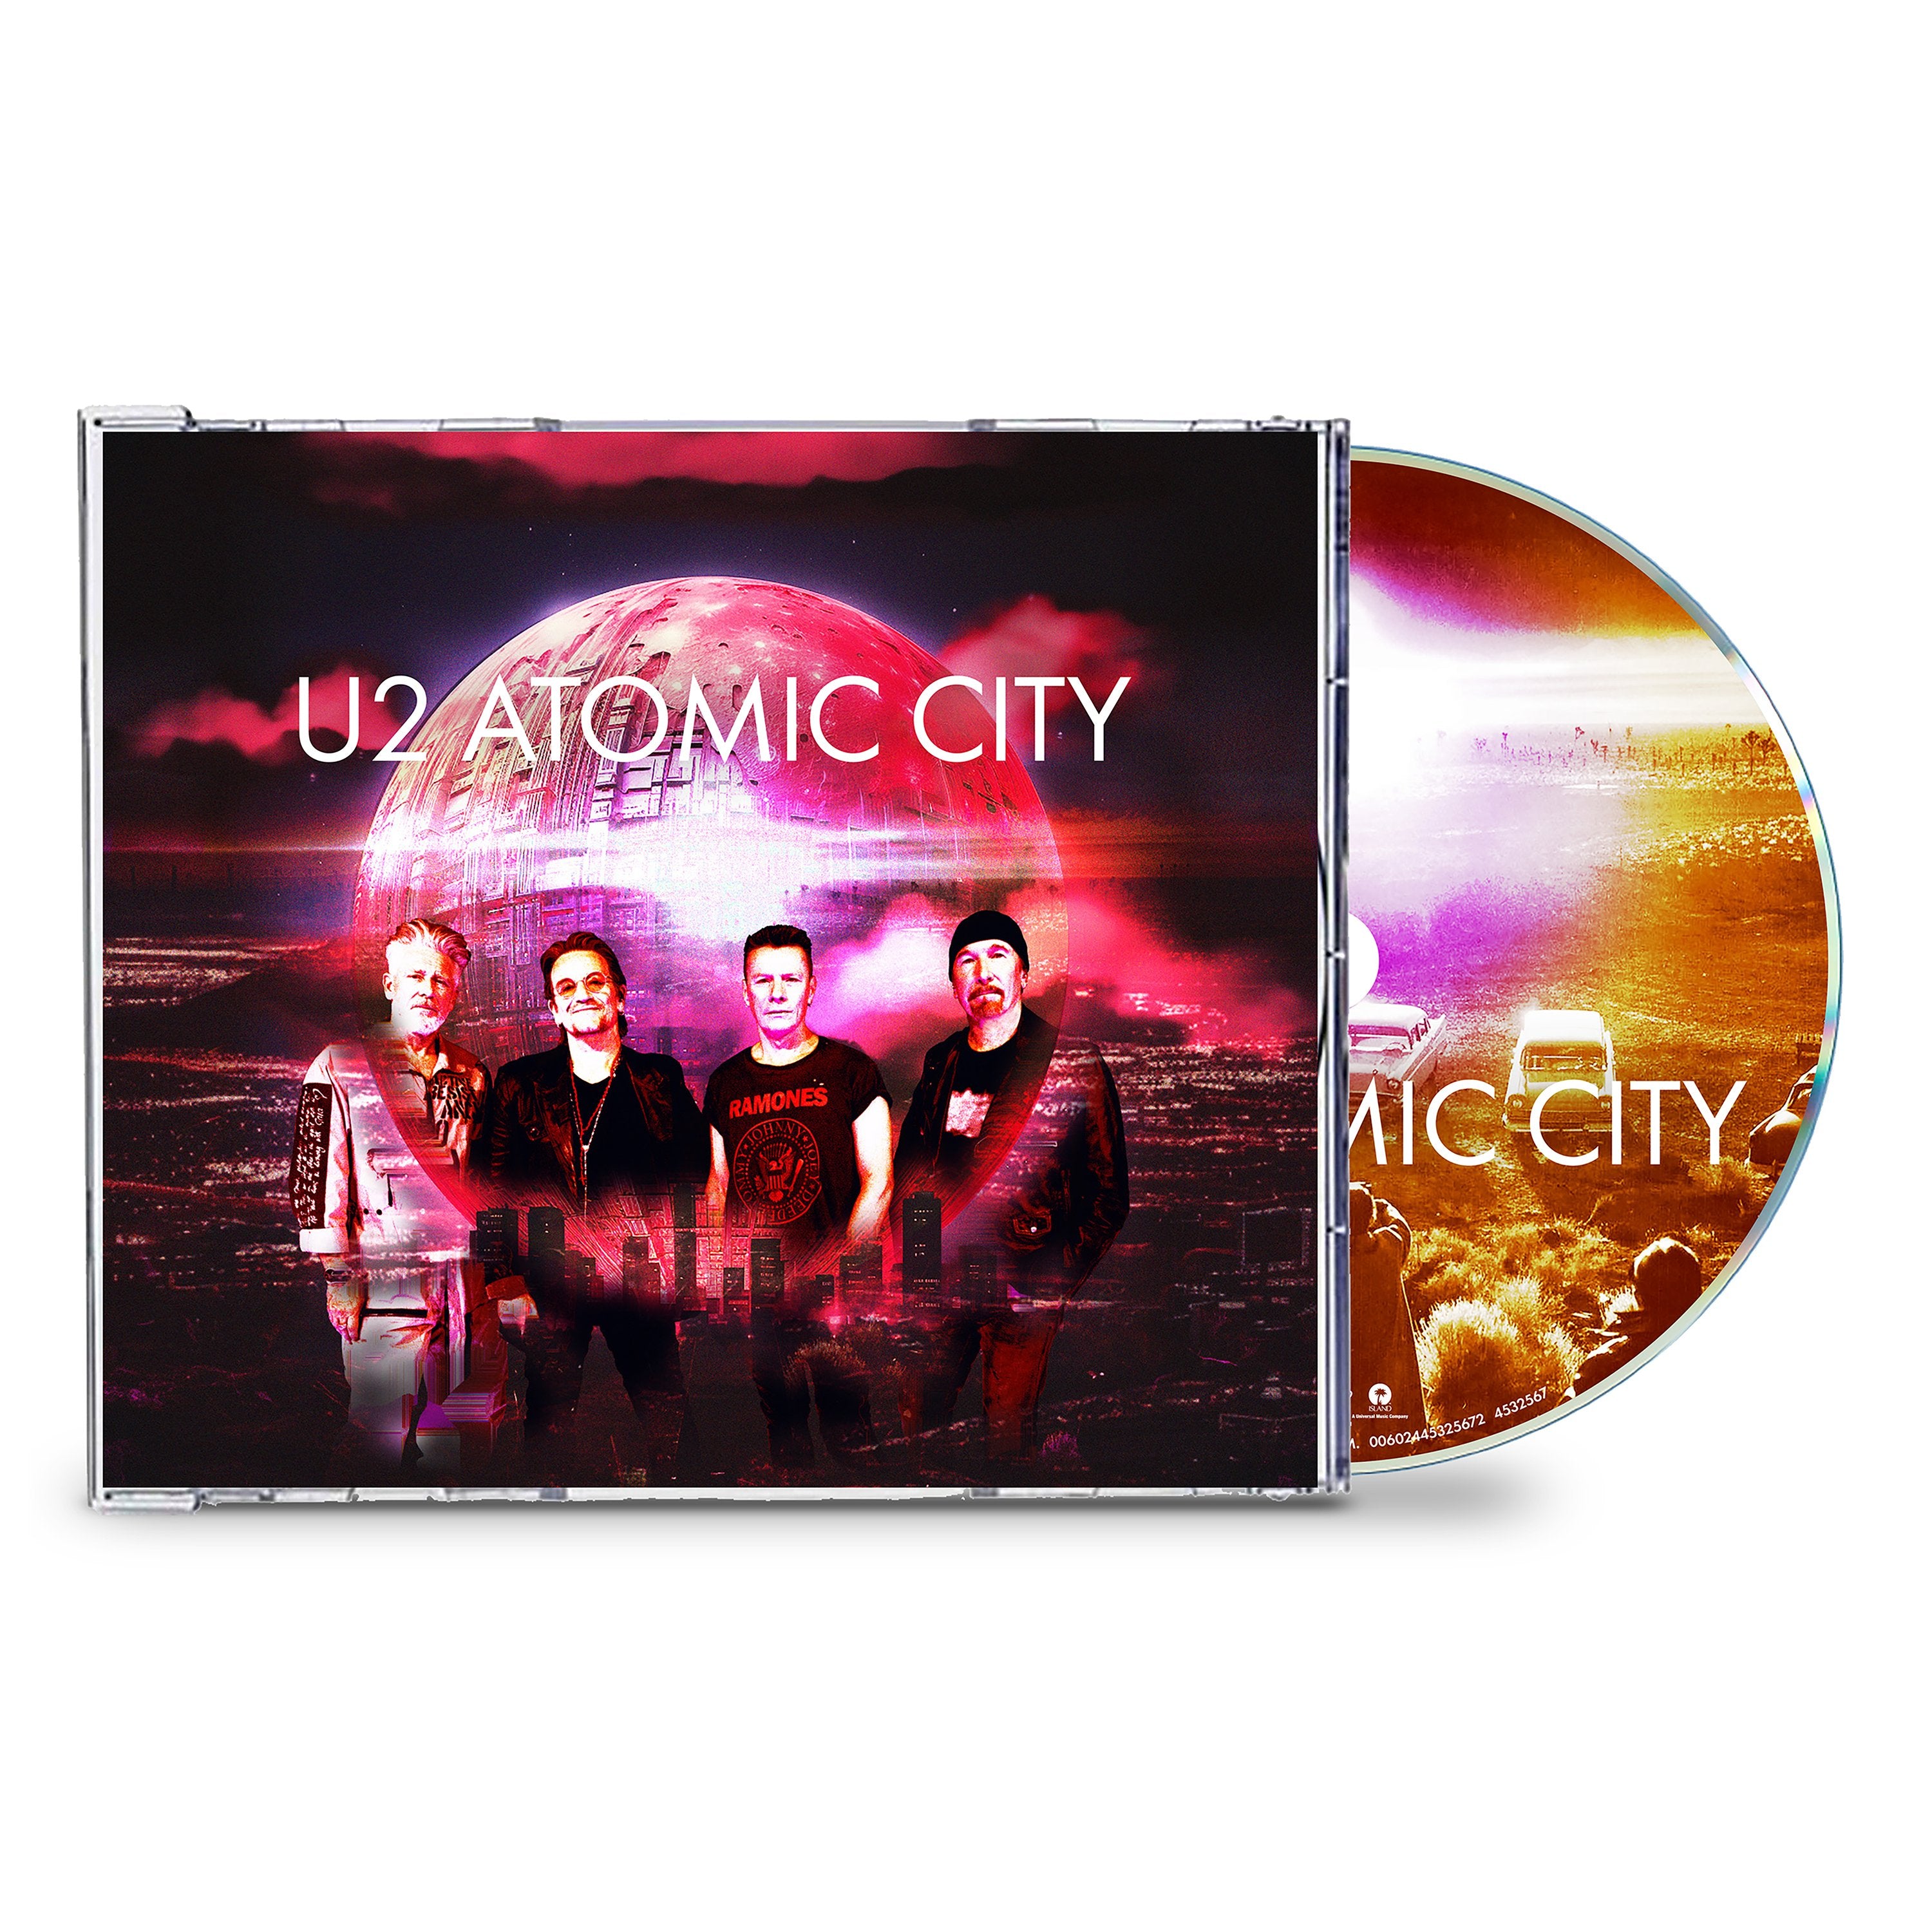 U2 - Atomic City: Limited Edition CD Single